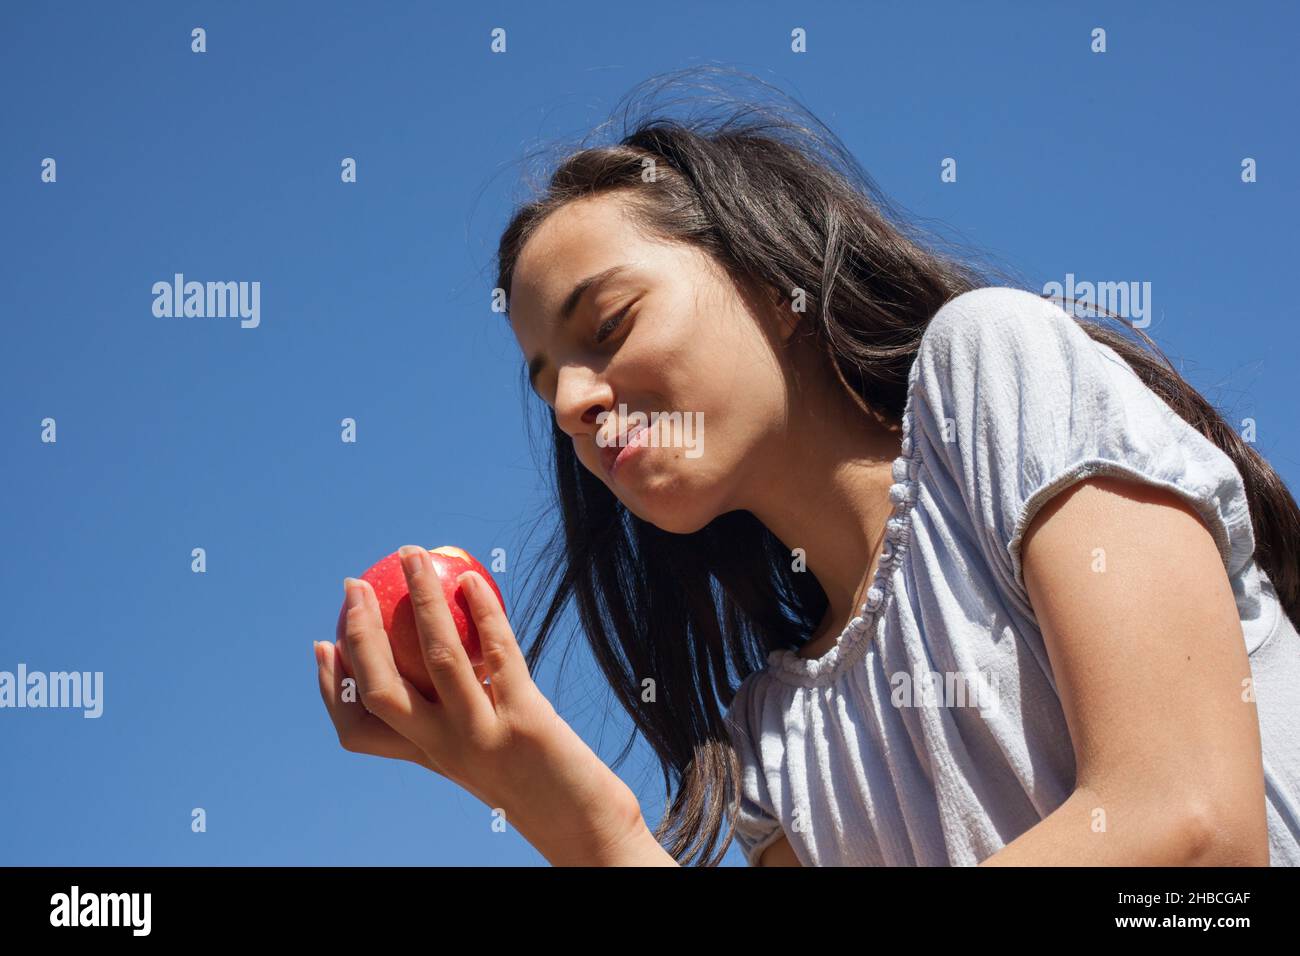 A girl eating an apple with a deep blue sky behind Stock Photo